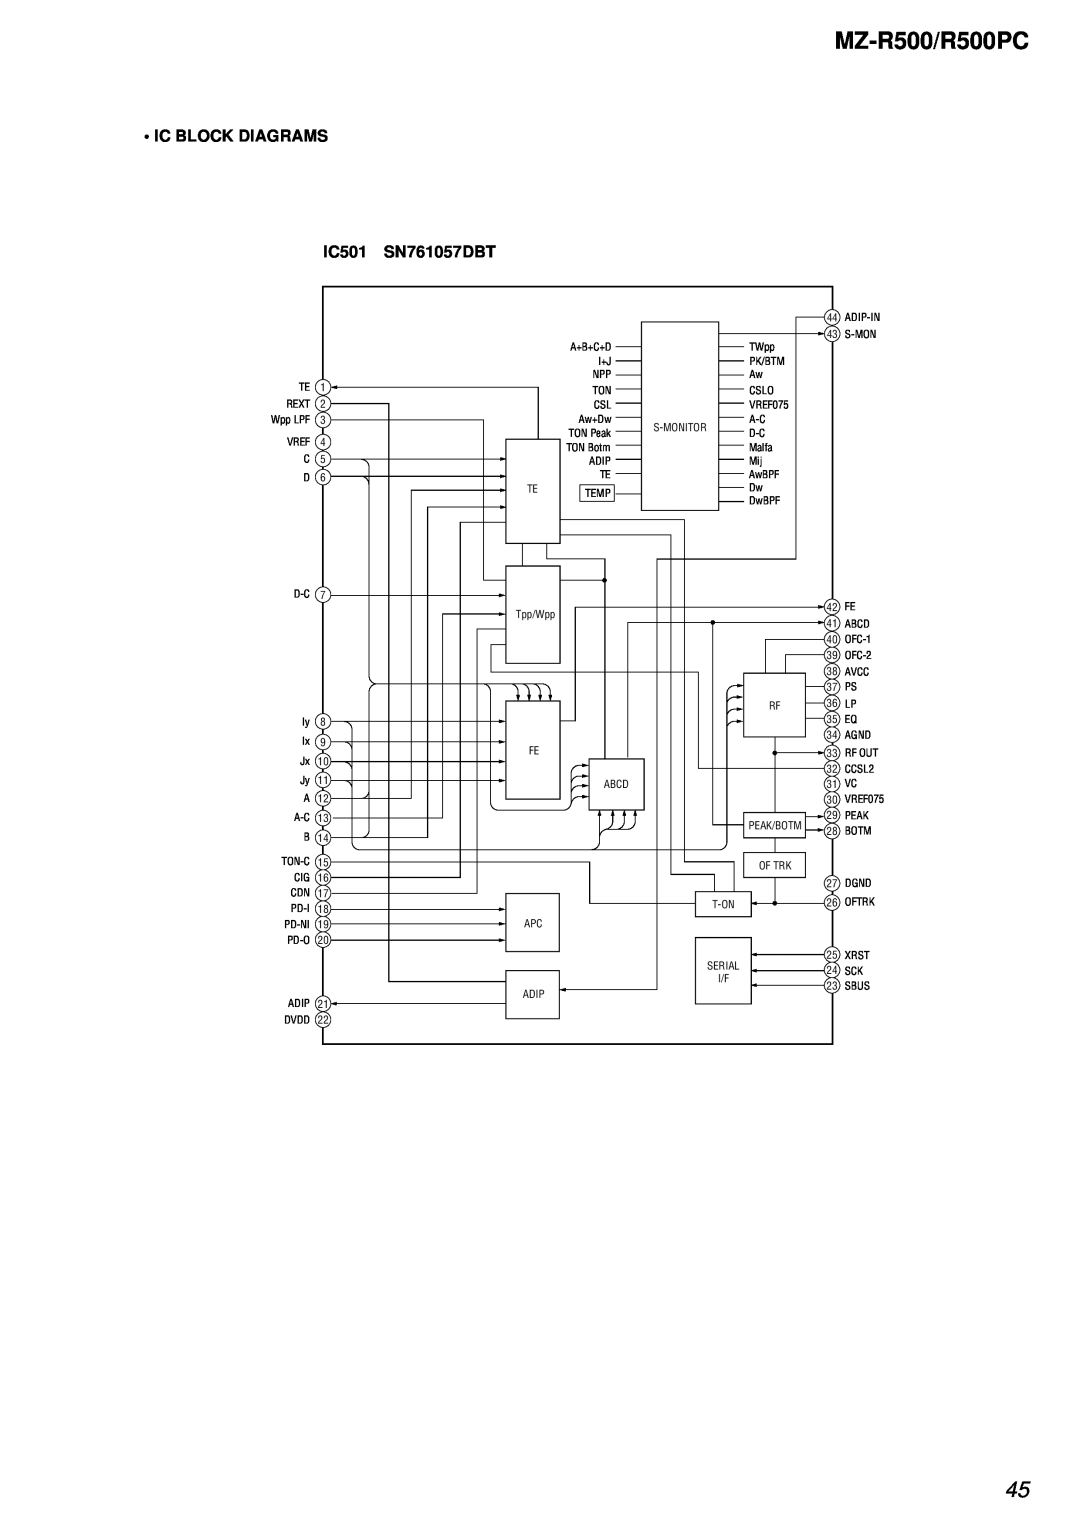 Sony service manual MZ-R500/R500PC, Ic Block Diagrams, IC501, SN761057DBT 